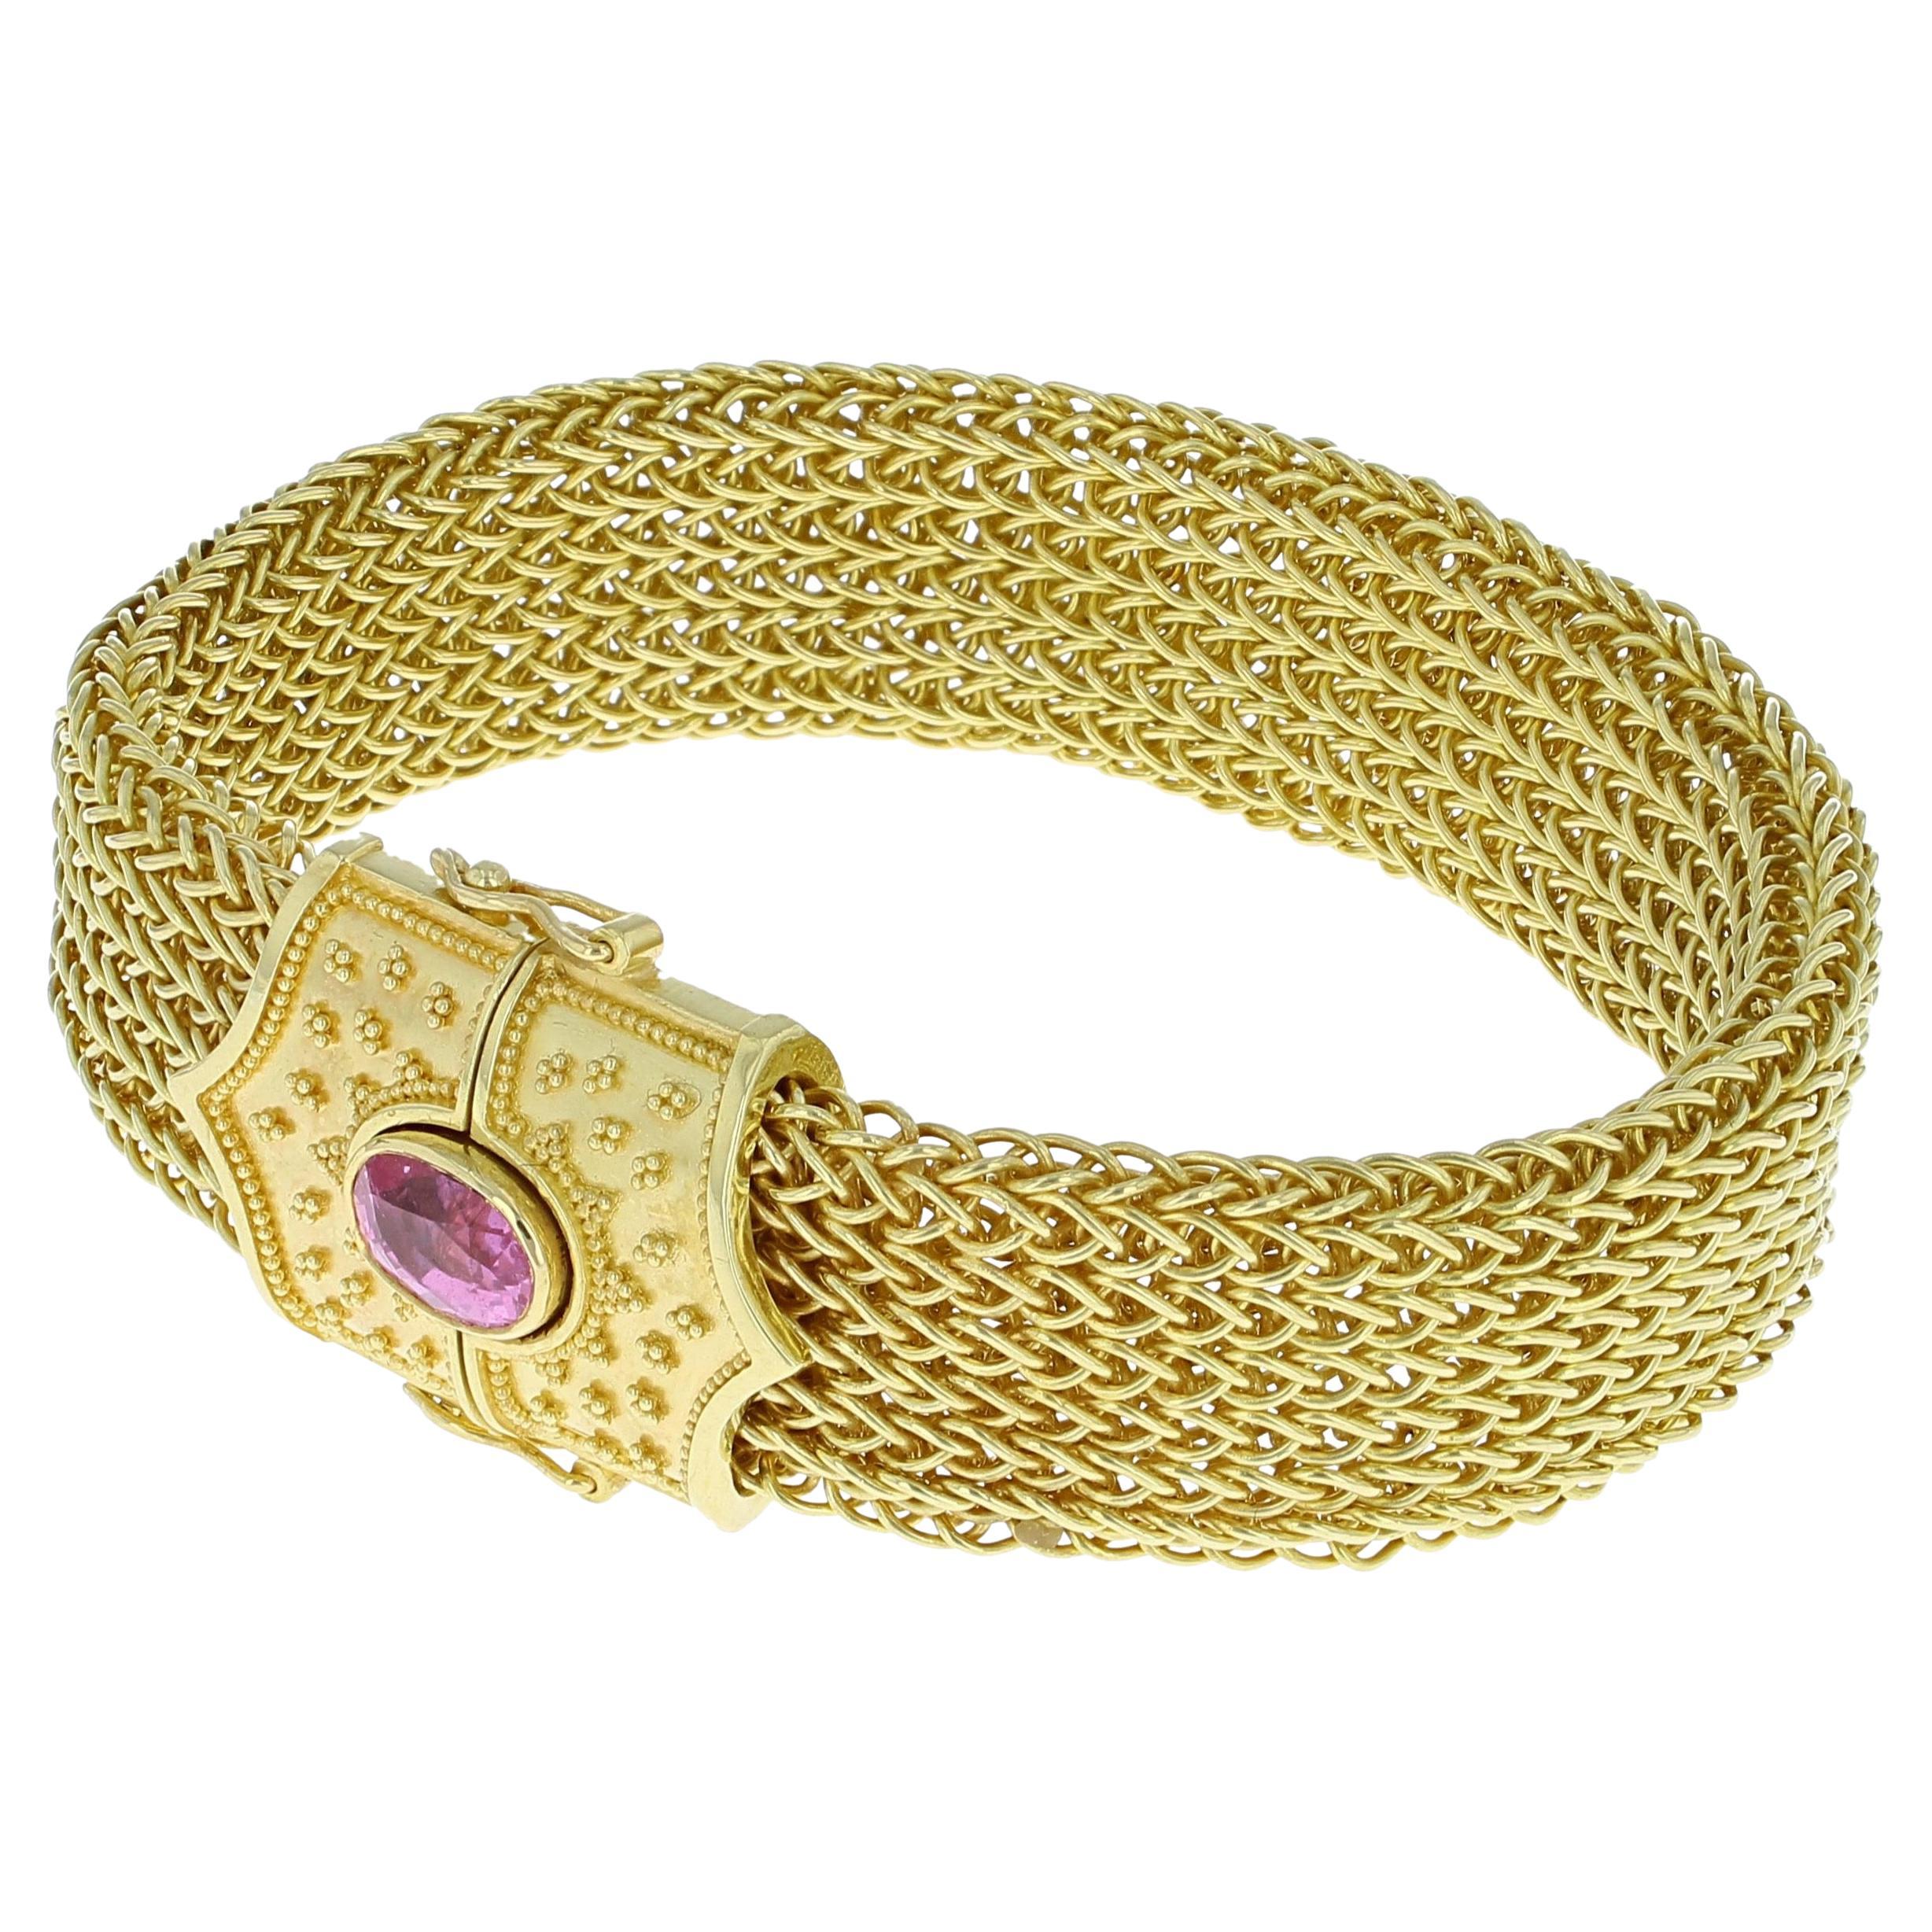 Kent Raible gewebtes Kettenarmband aus 18 Karat Gold mit rosa Saphiren und Granulation